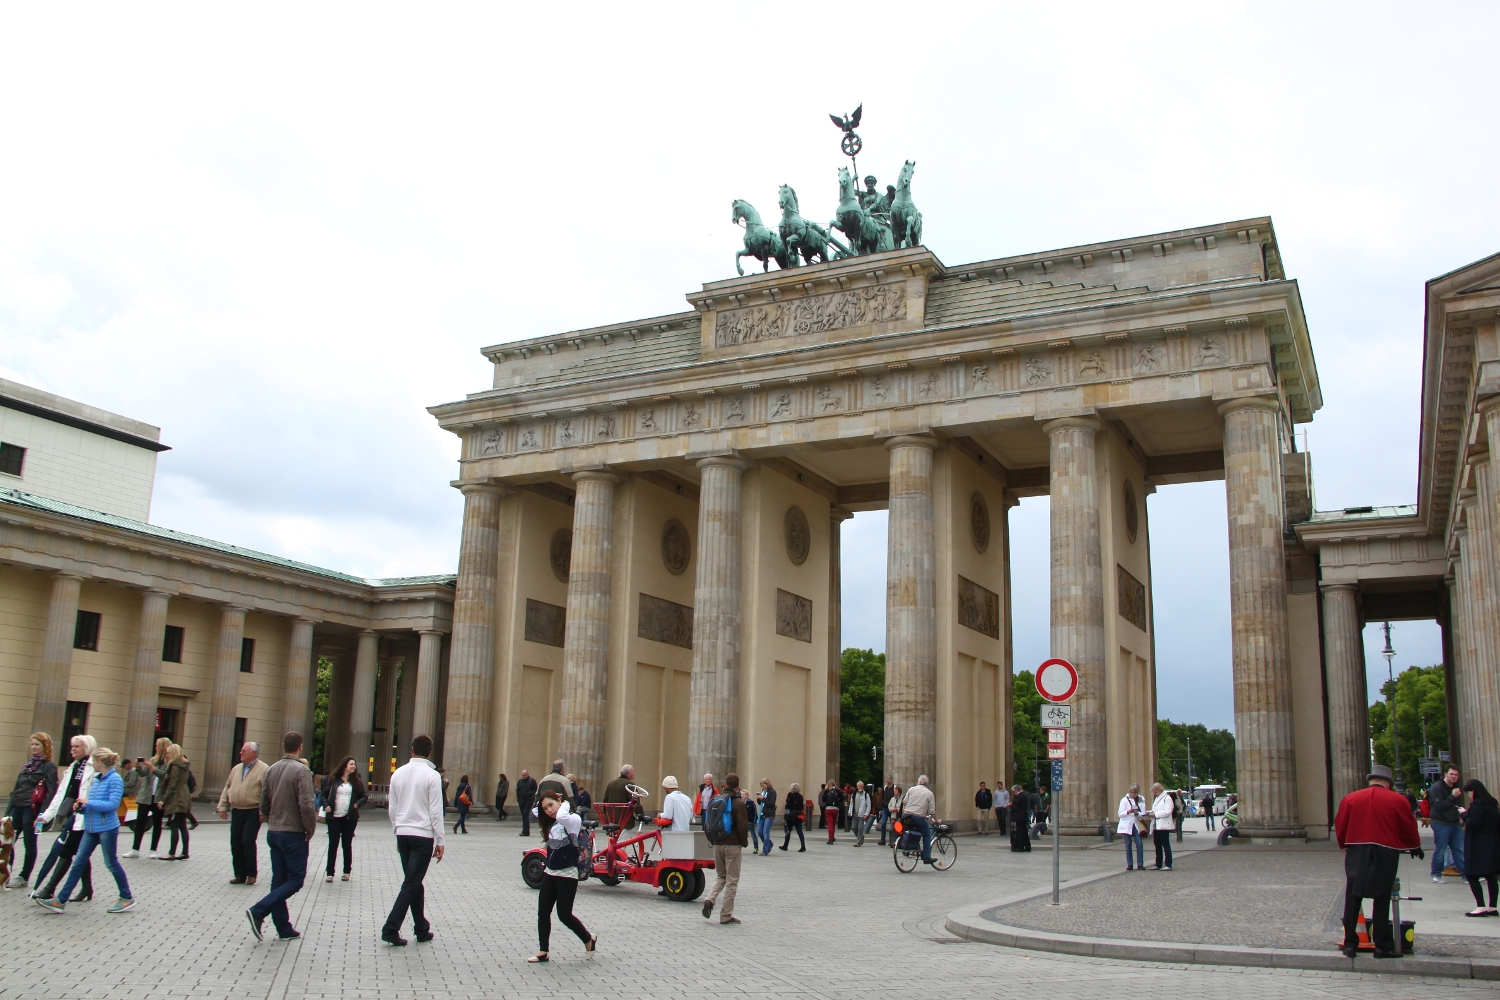 The Brandenburg Gate: history and photos